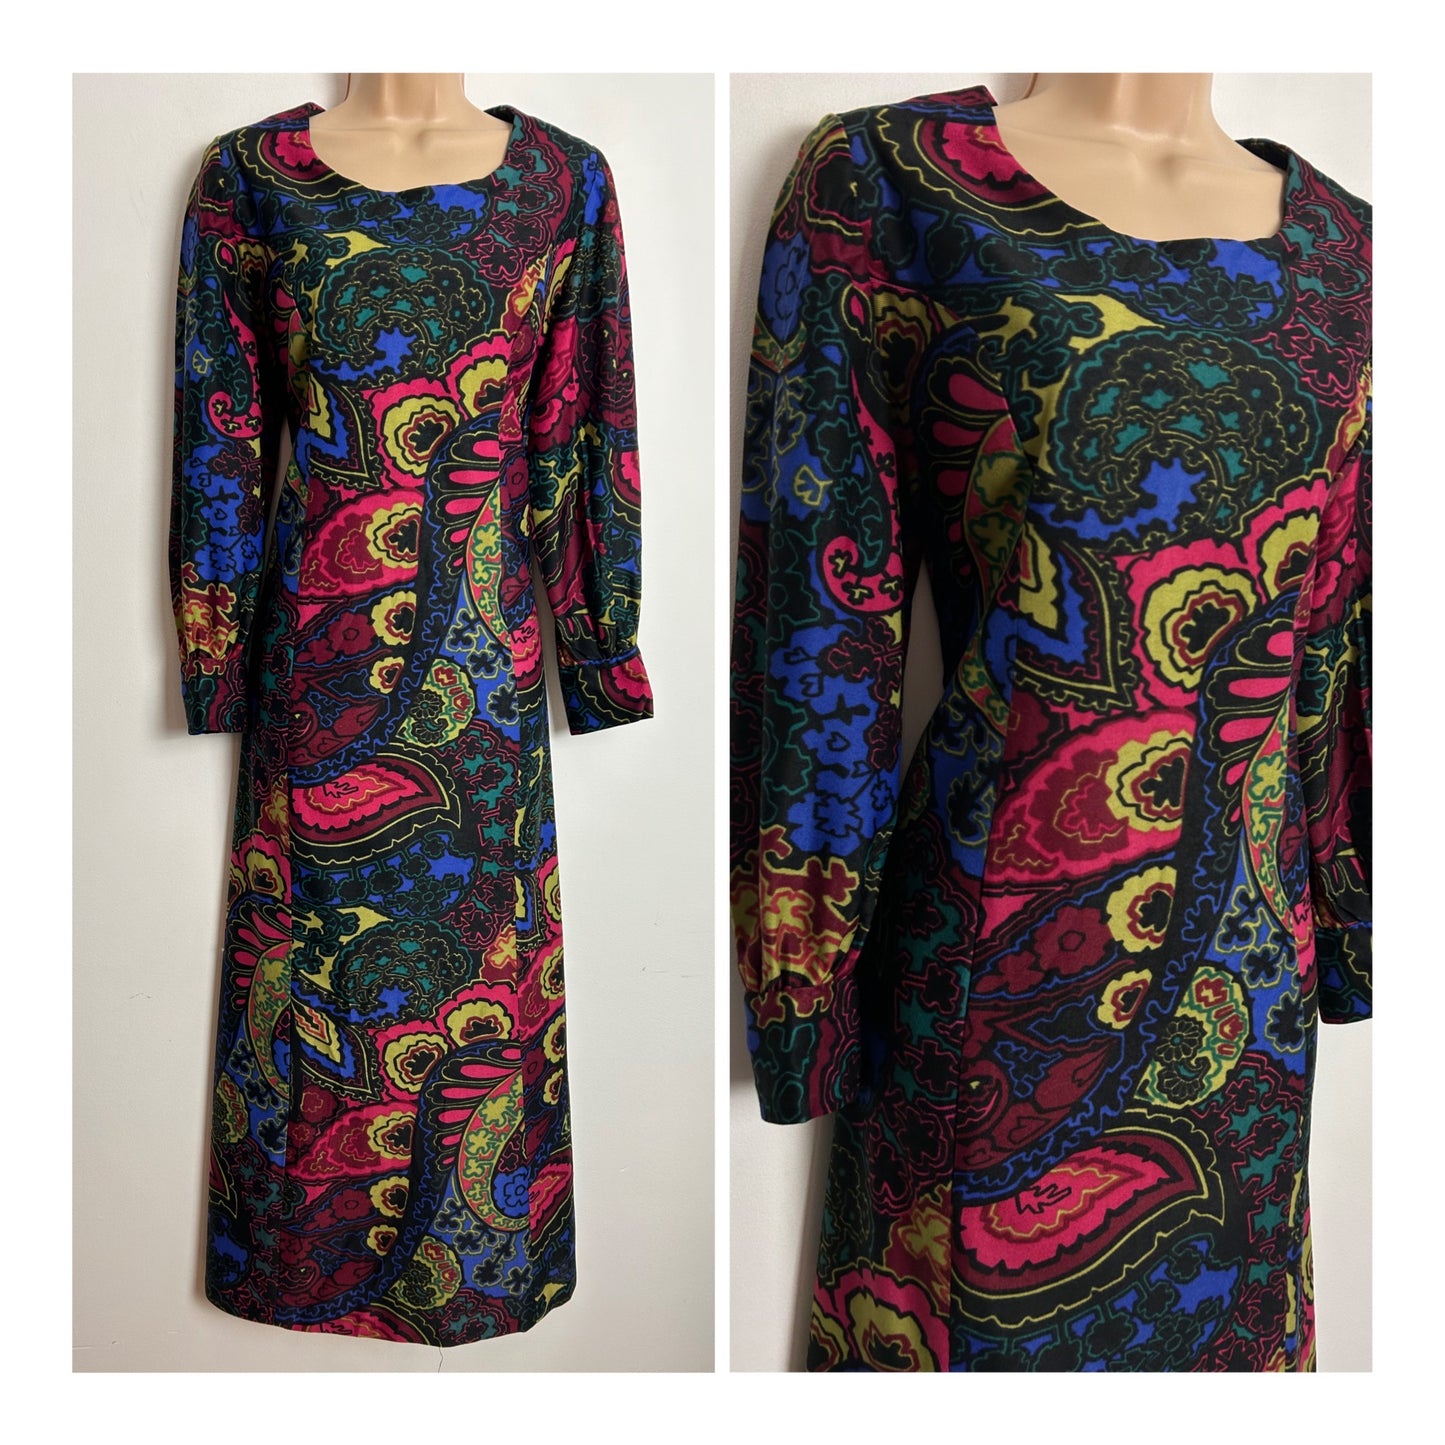 Vintage 1970s UK Size 10 Black Blue Green & Dark Pink Bold Floral Print Long Sleeve Boho Midaxi Dress